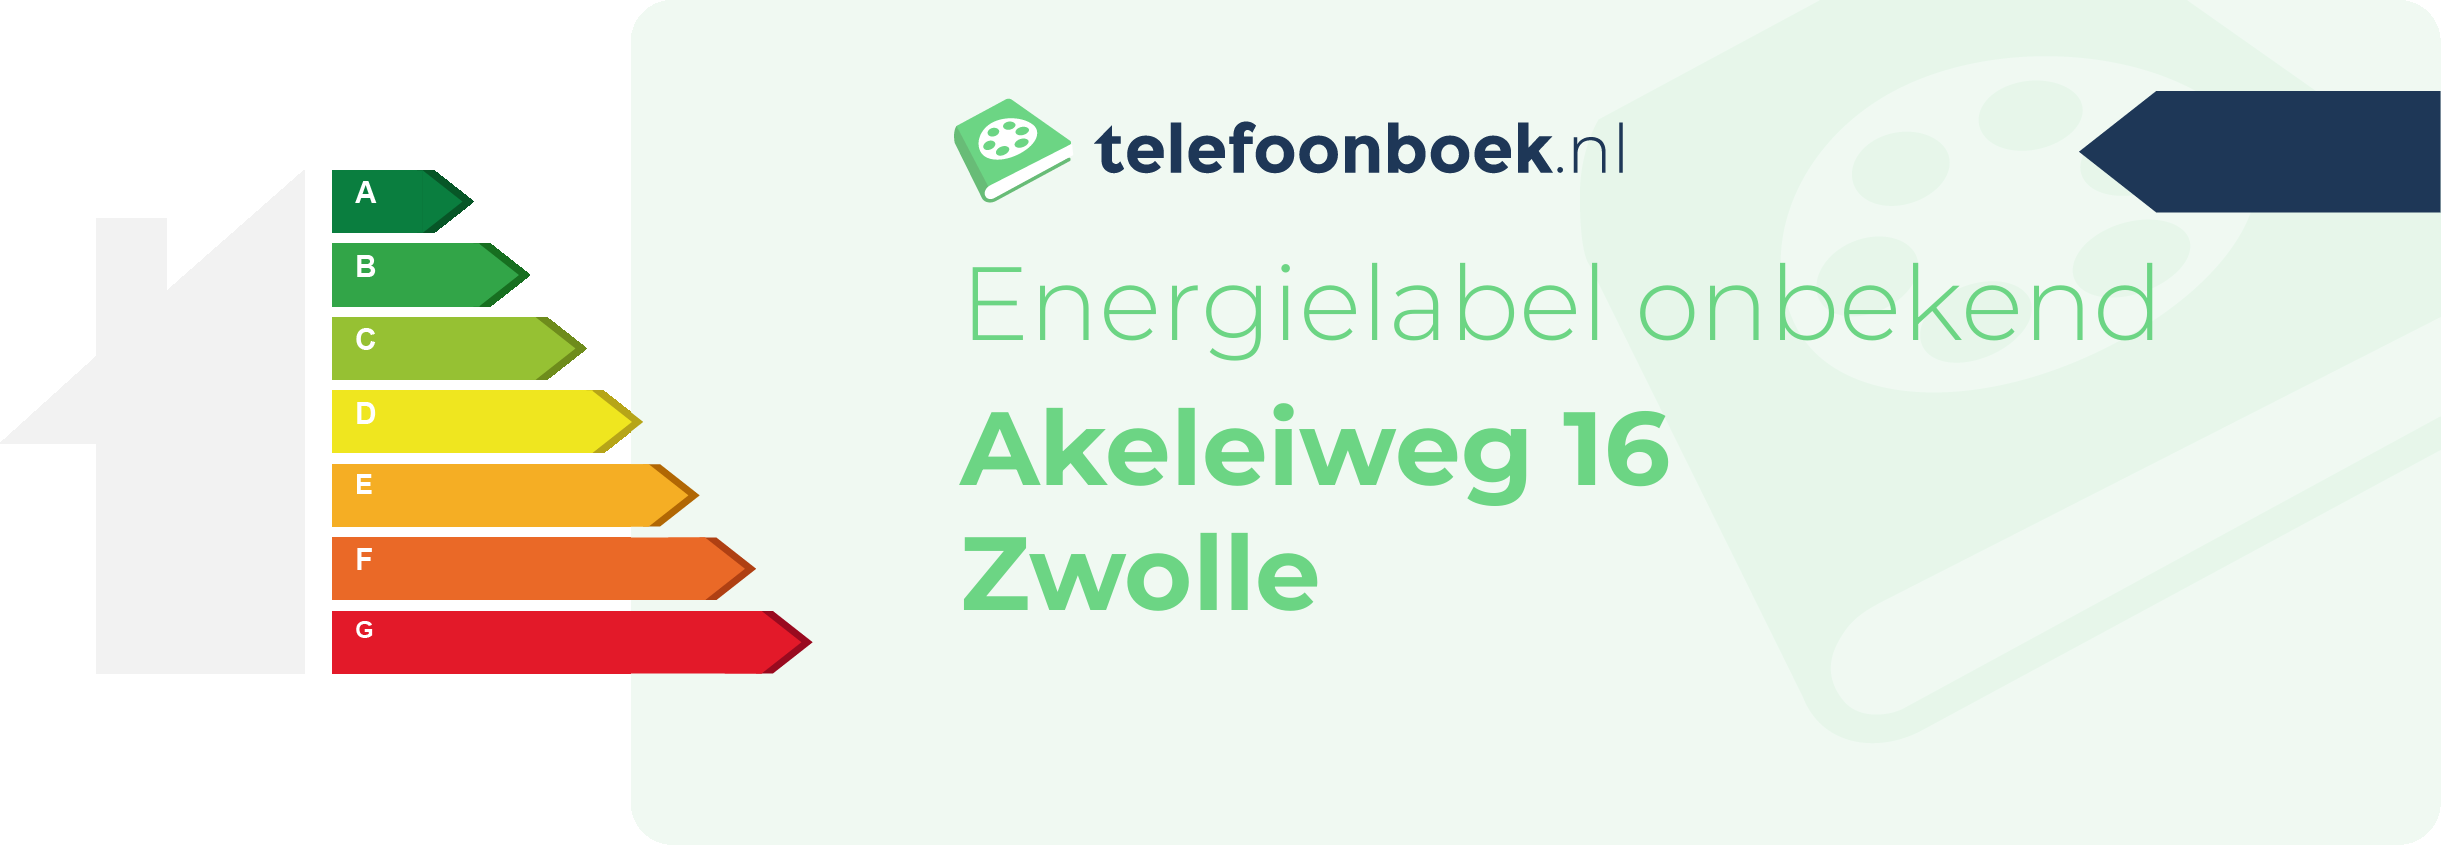 Energielabel Akeleiweg 16 Zwolle